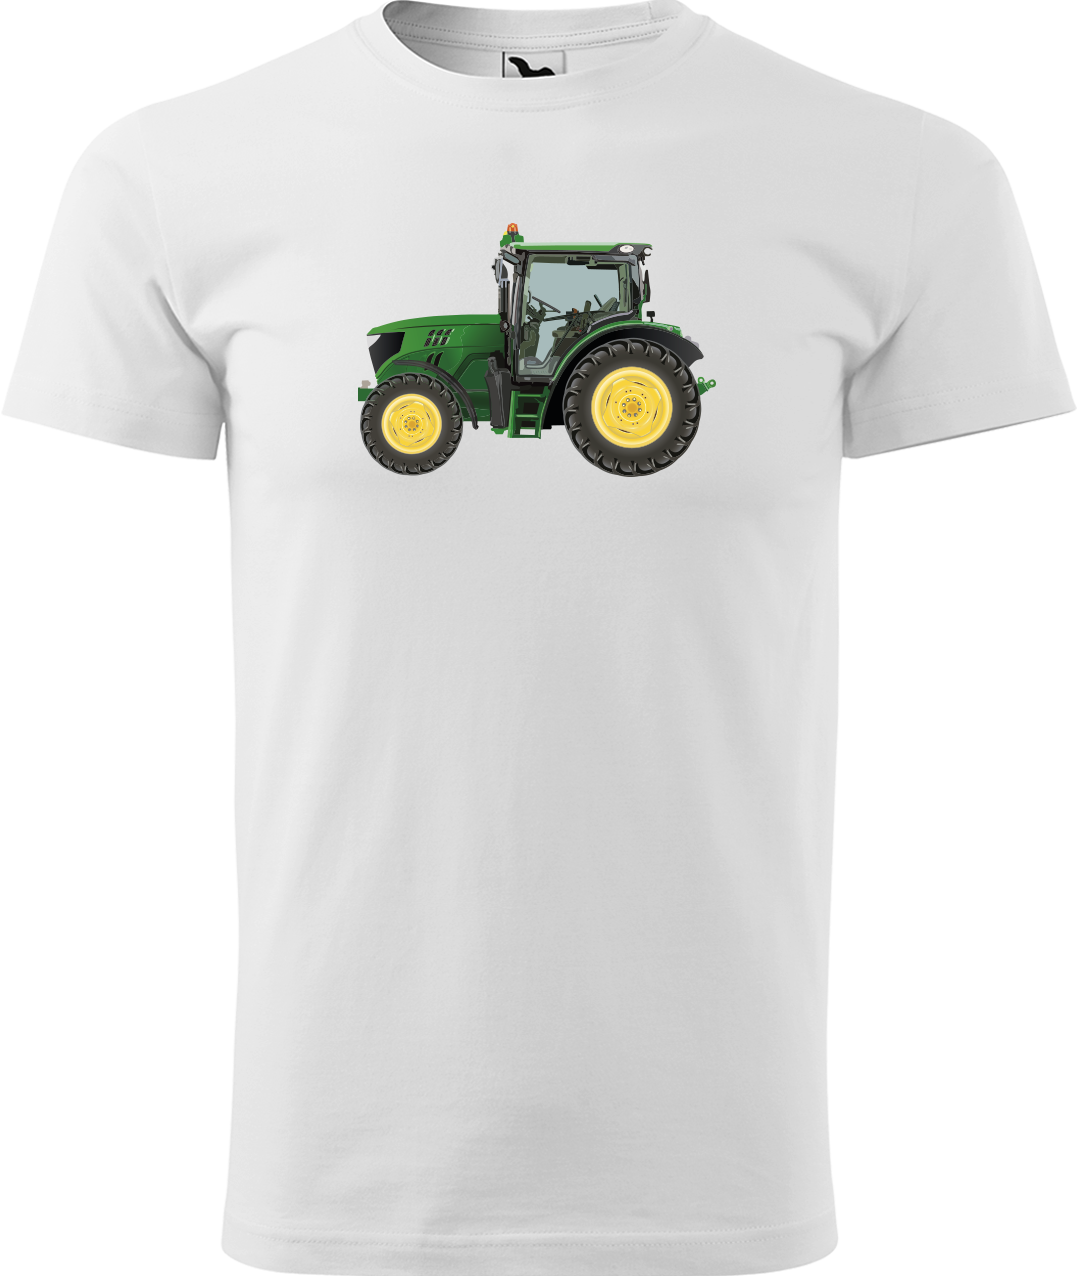 Tričko s traktorem - Zelený traktor Velikost: M, Barva: Bílá (00)